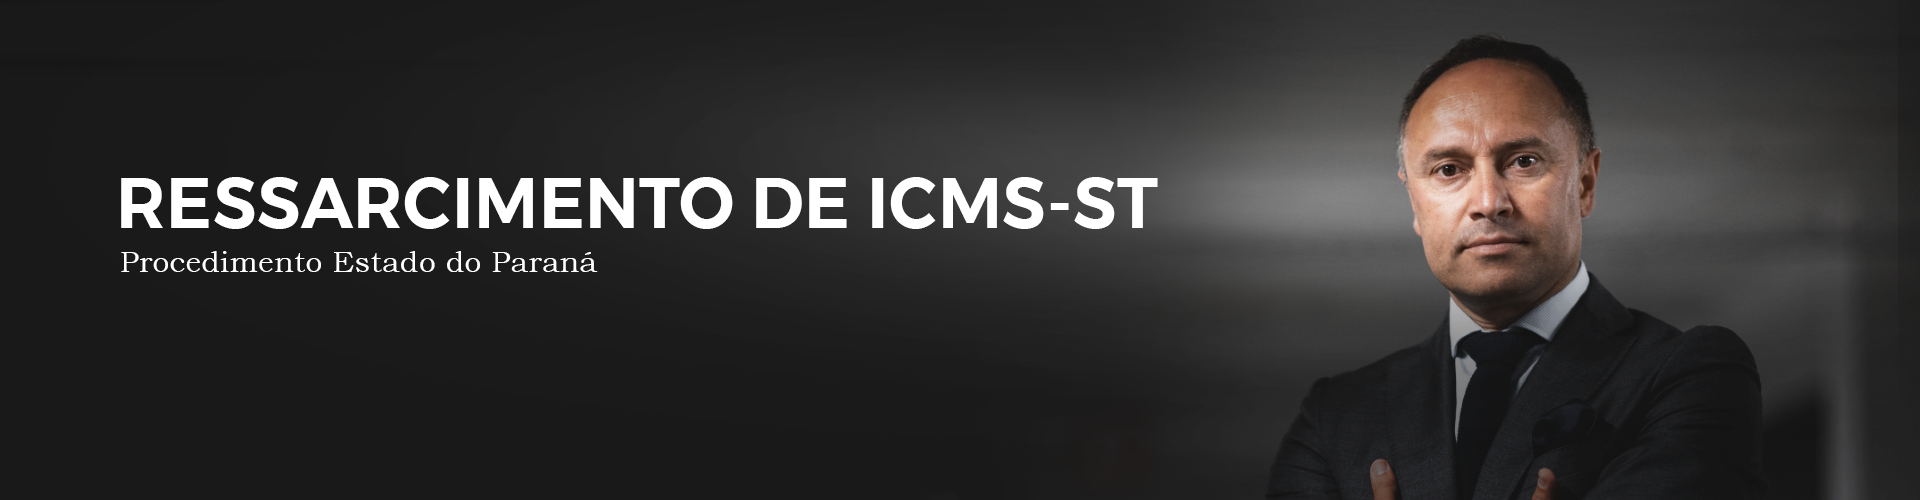 Ressarcimento ICMS-ST Paraná